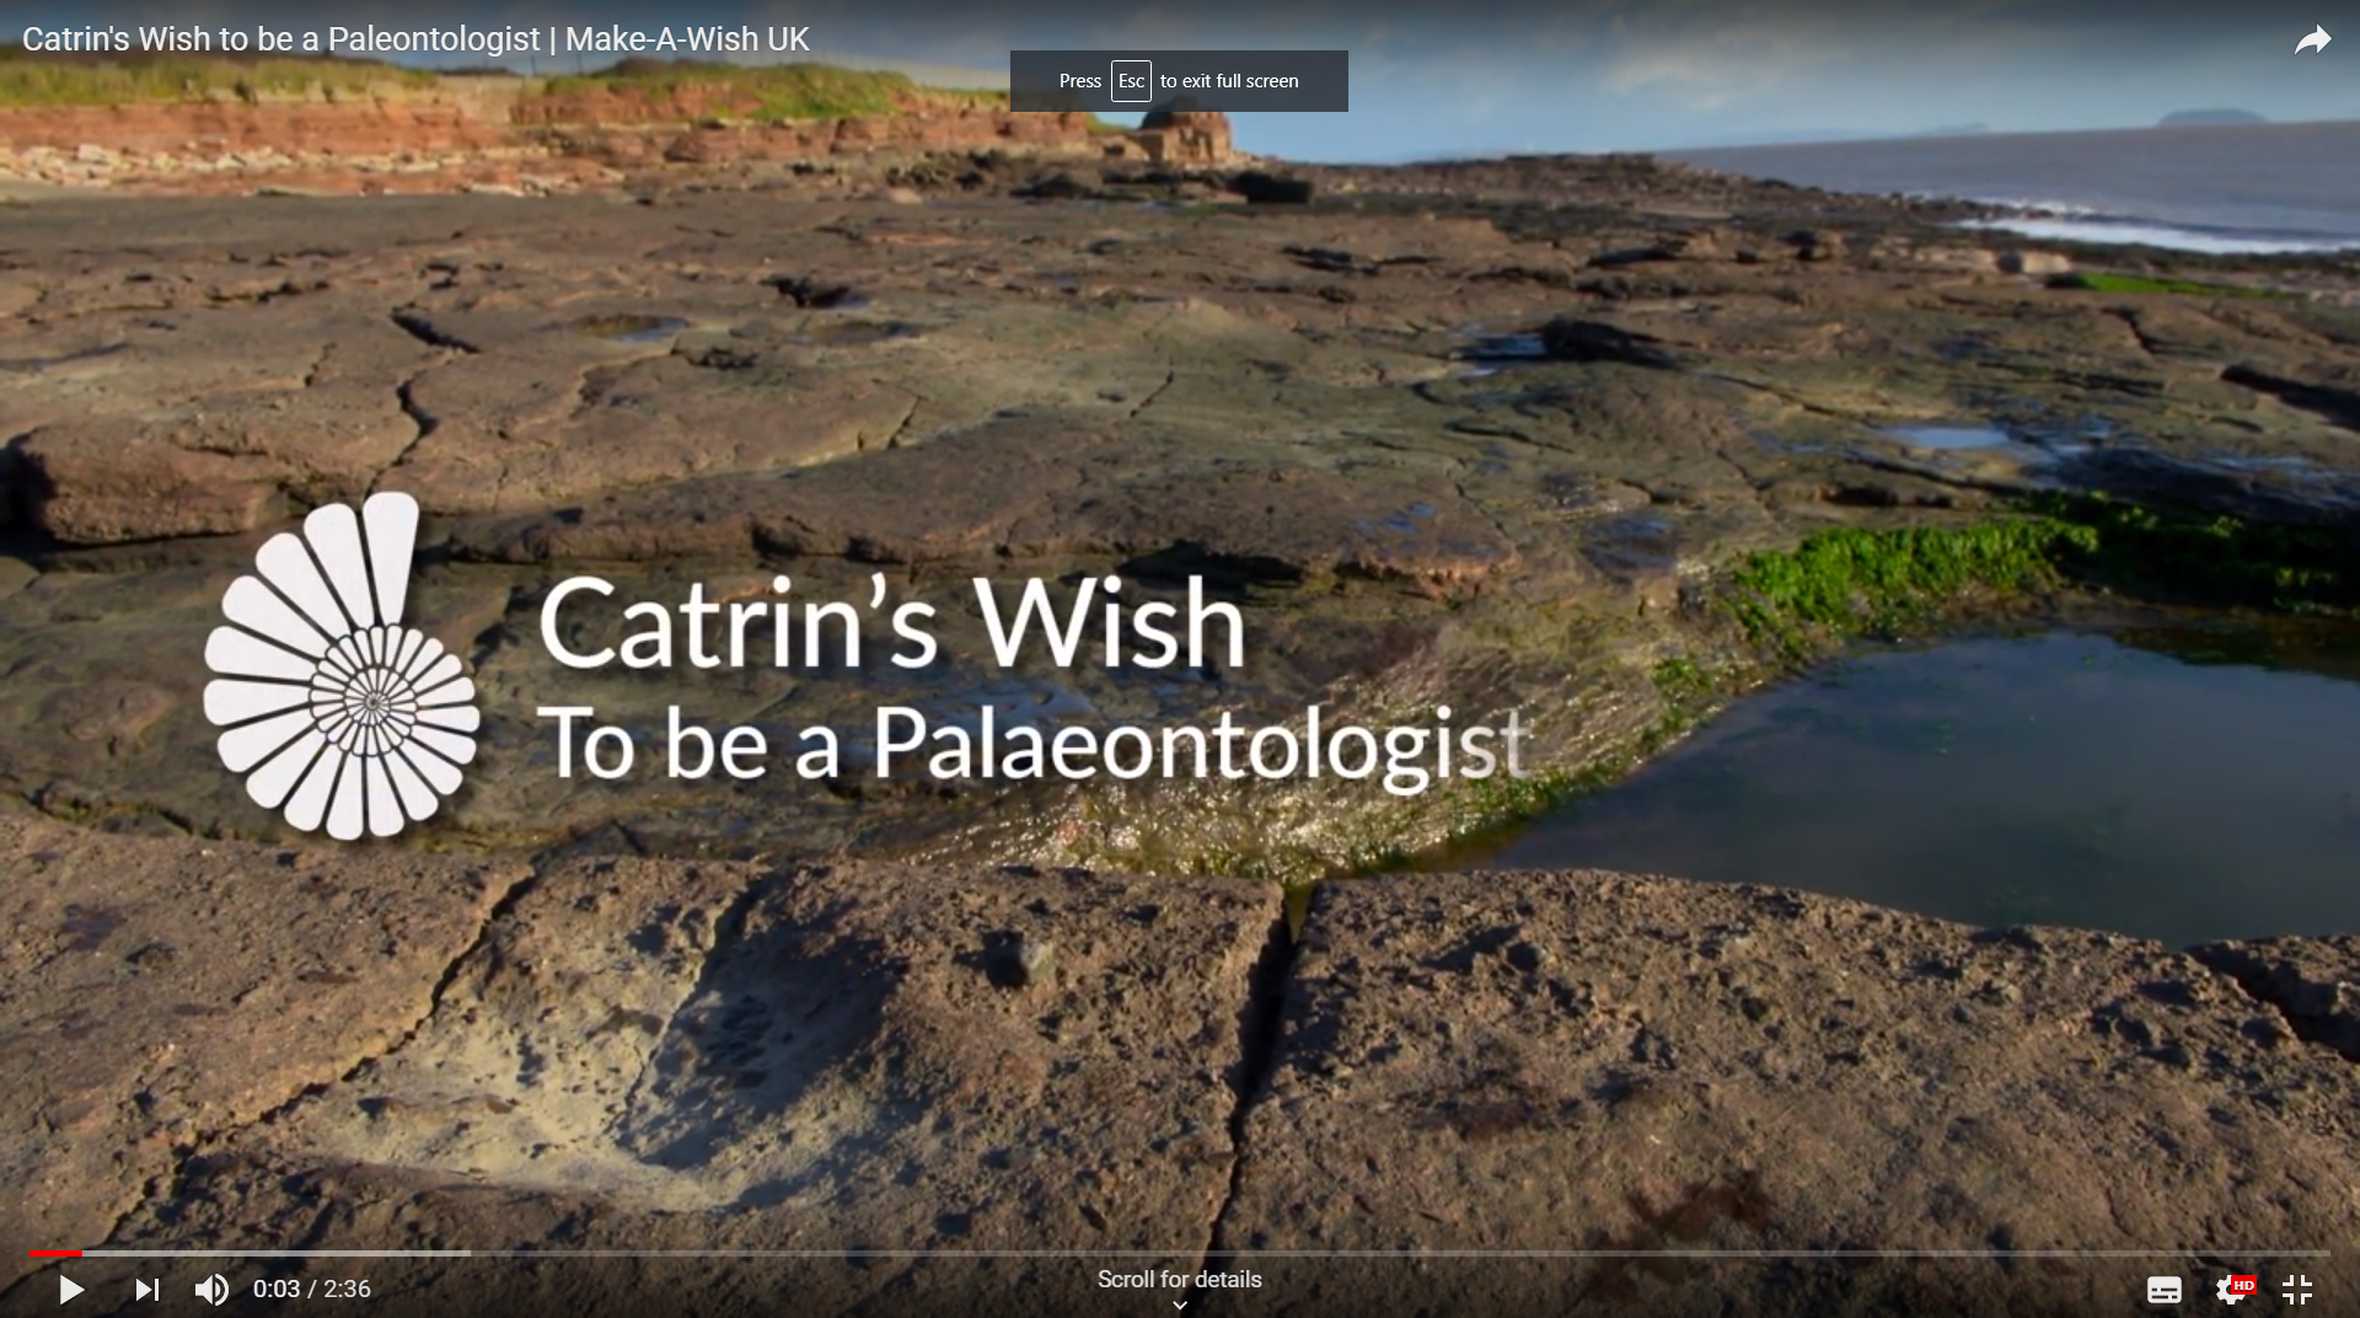 Catrin's wish video